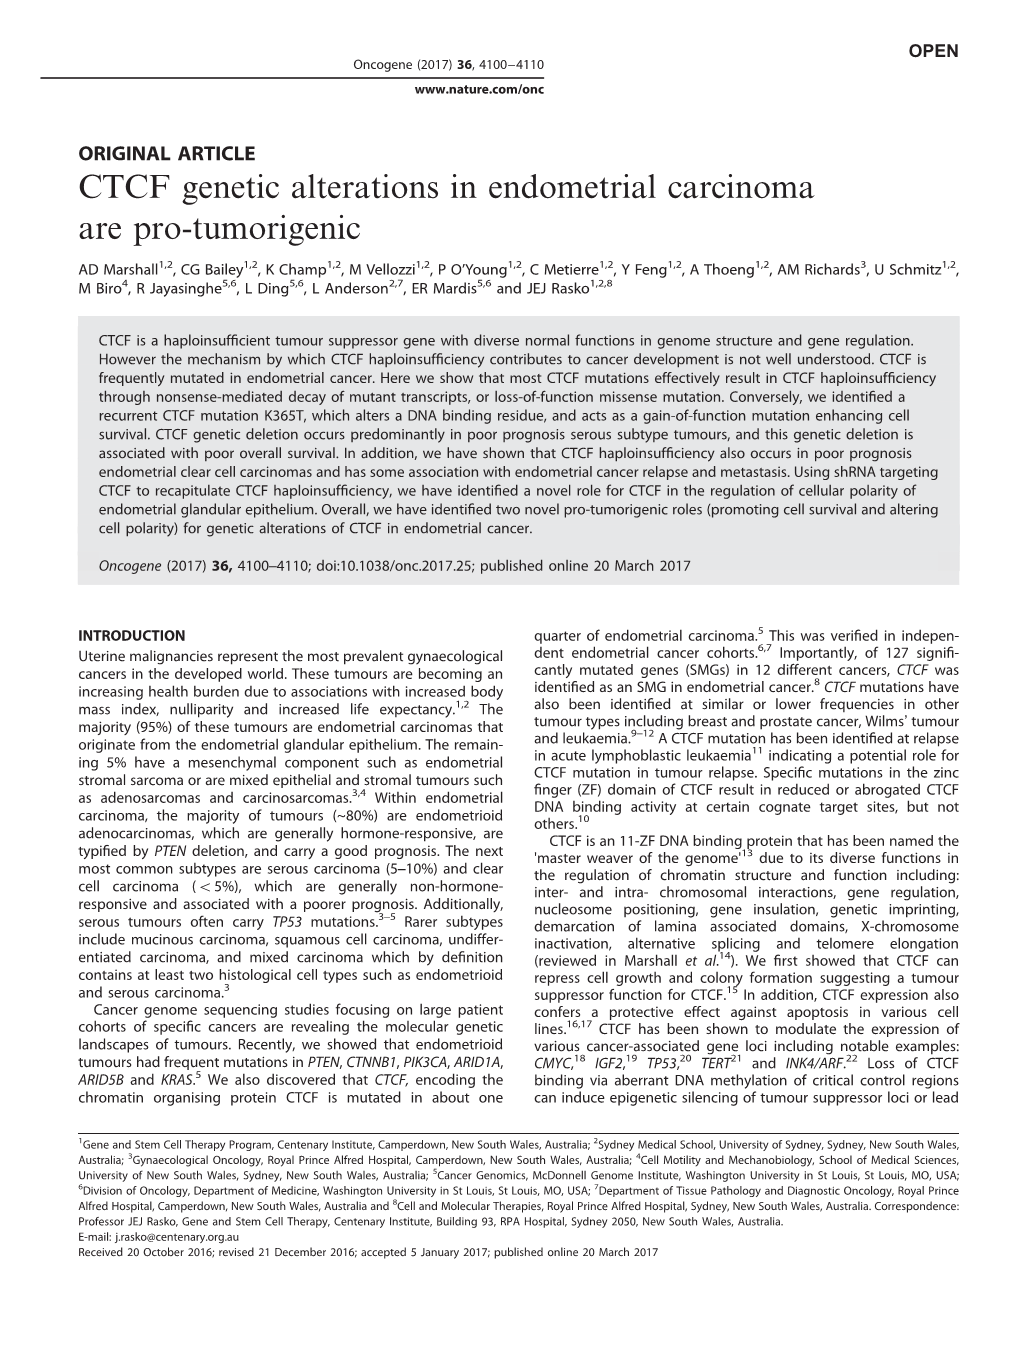 CTCF Genetic Alterations in Endometrial Carcinoma Are Pro-Tumorigenic